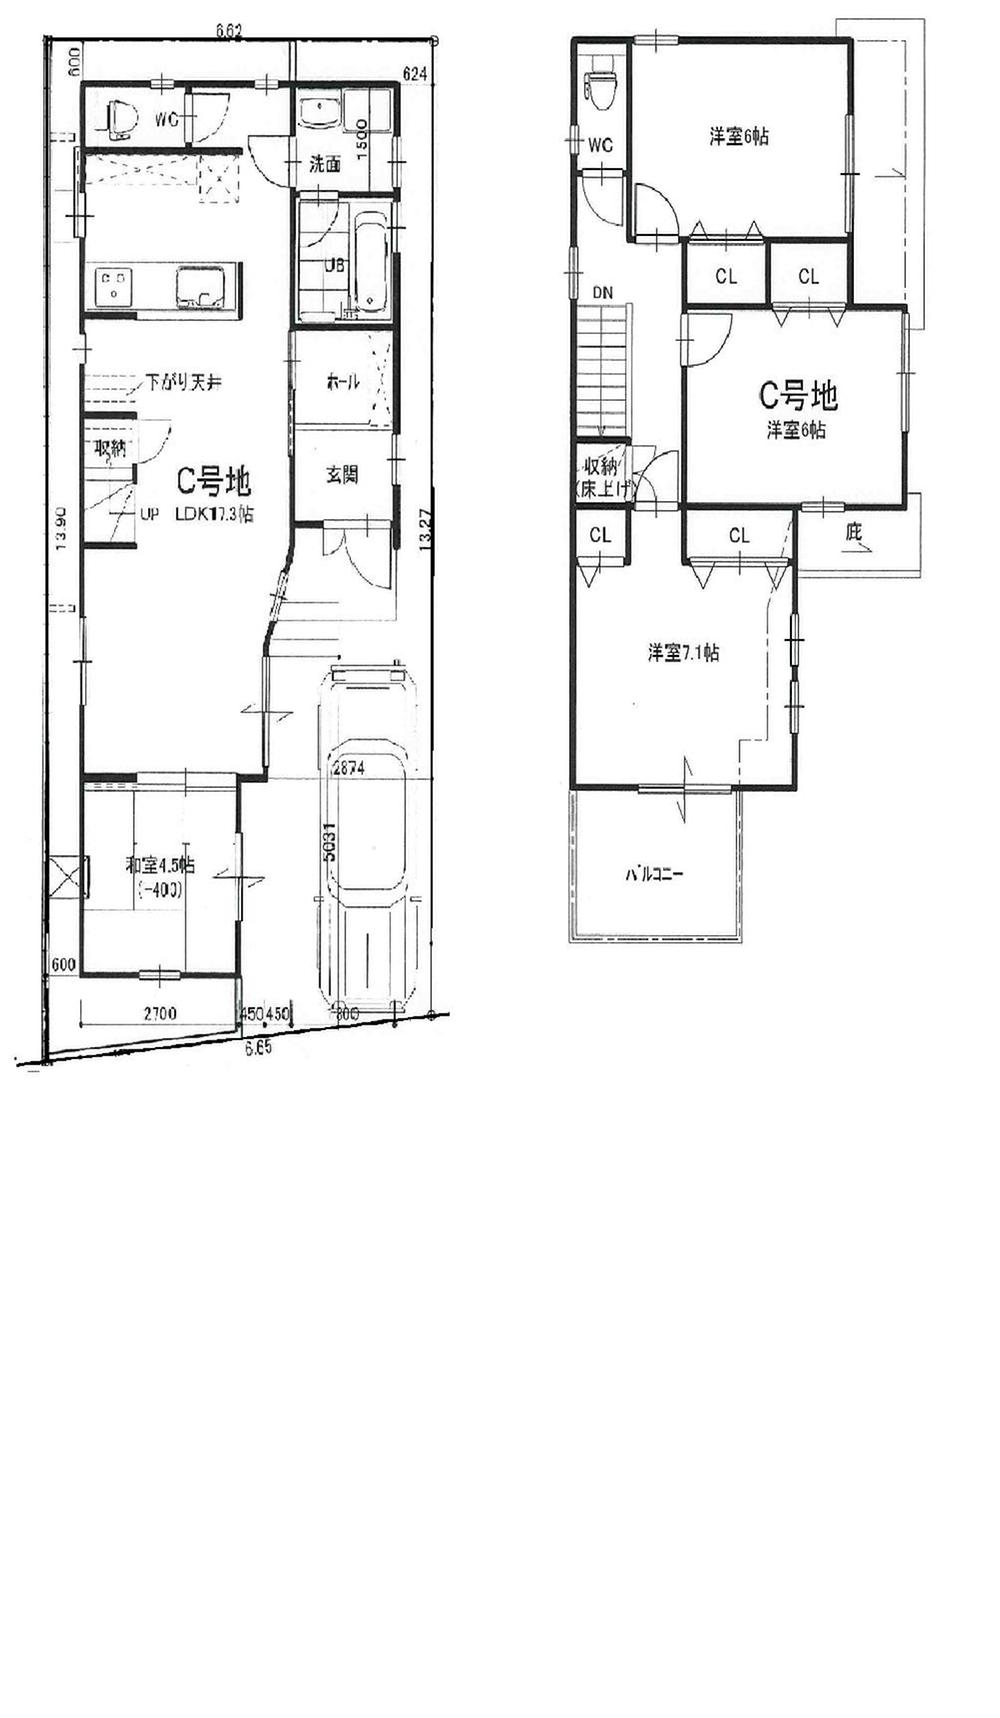 Building plan example (floor plan). Building plan example (C No. land) 4LDK, Land price 21,575,000 yen, Land area 90.03 sq m , Building price 15,225,000 yen, Building area 95.45 sq m